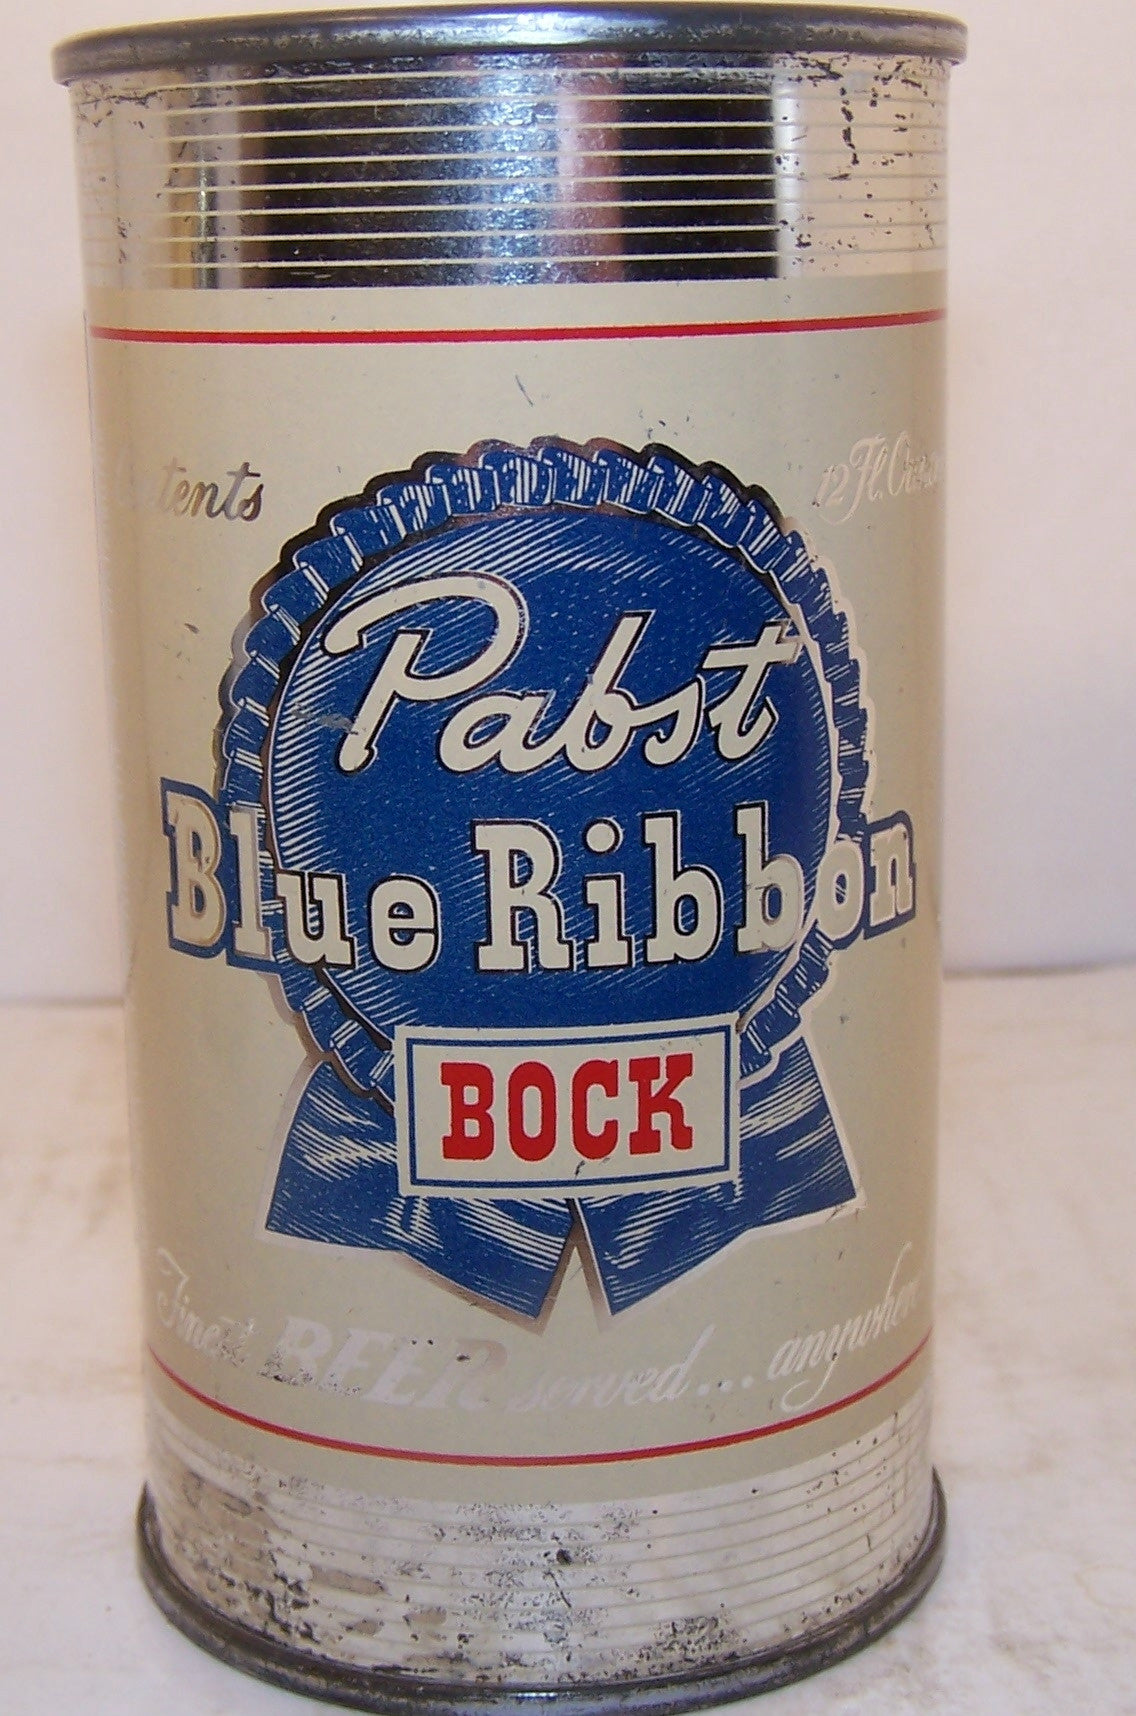 Pabst Blue Ribbon Bock, USBC 112-6, grade 1/1- Sold on 11/20/14